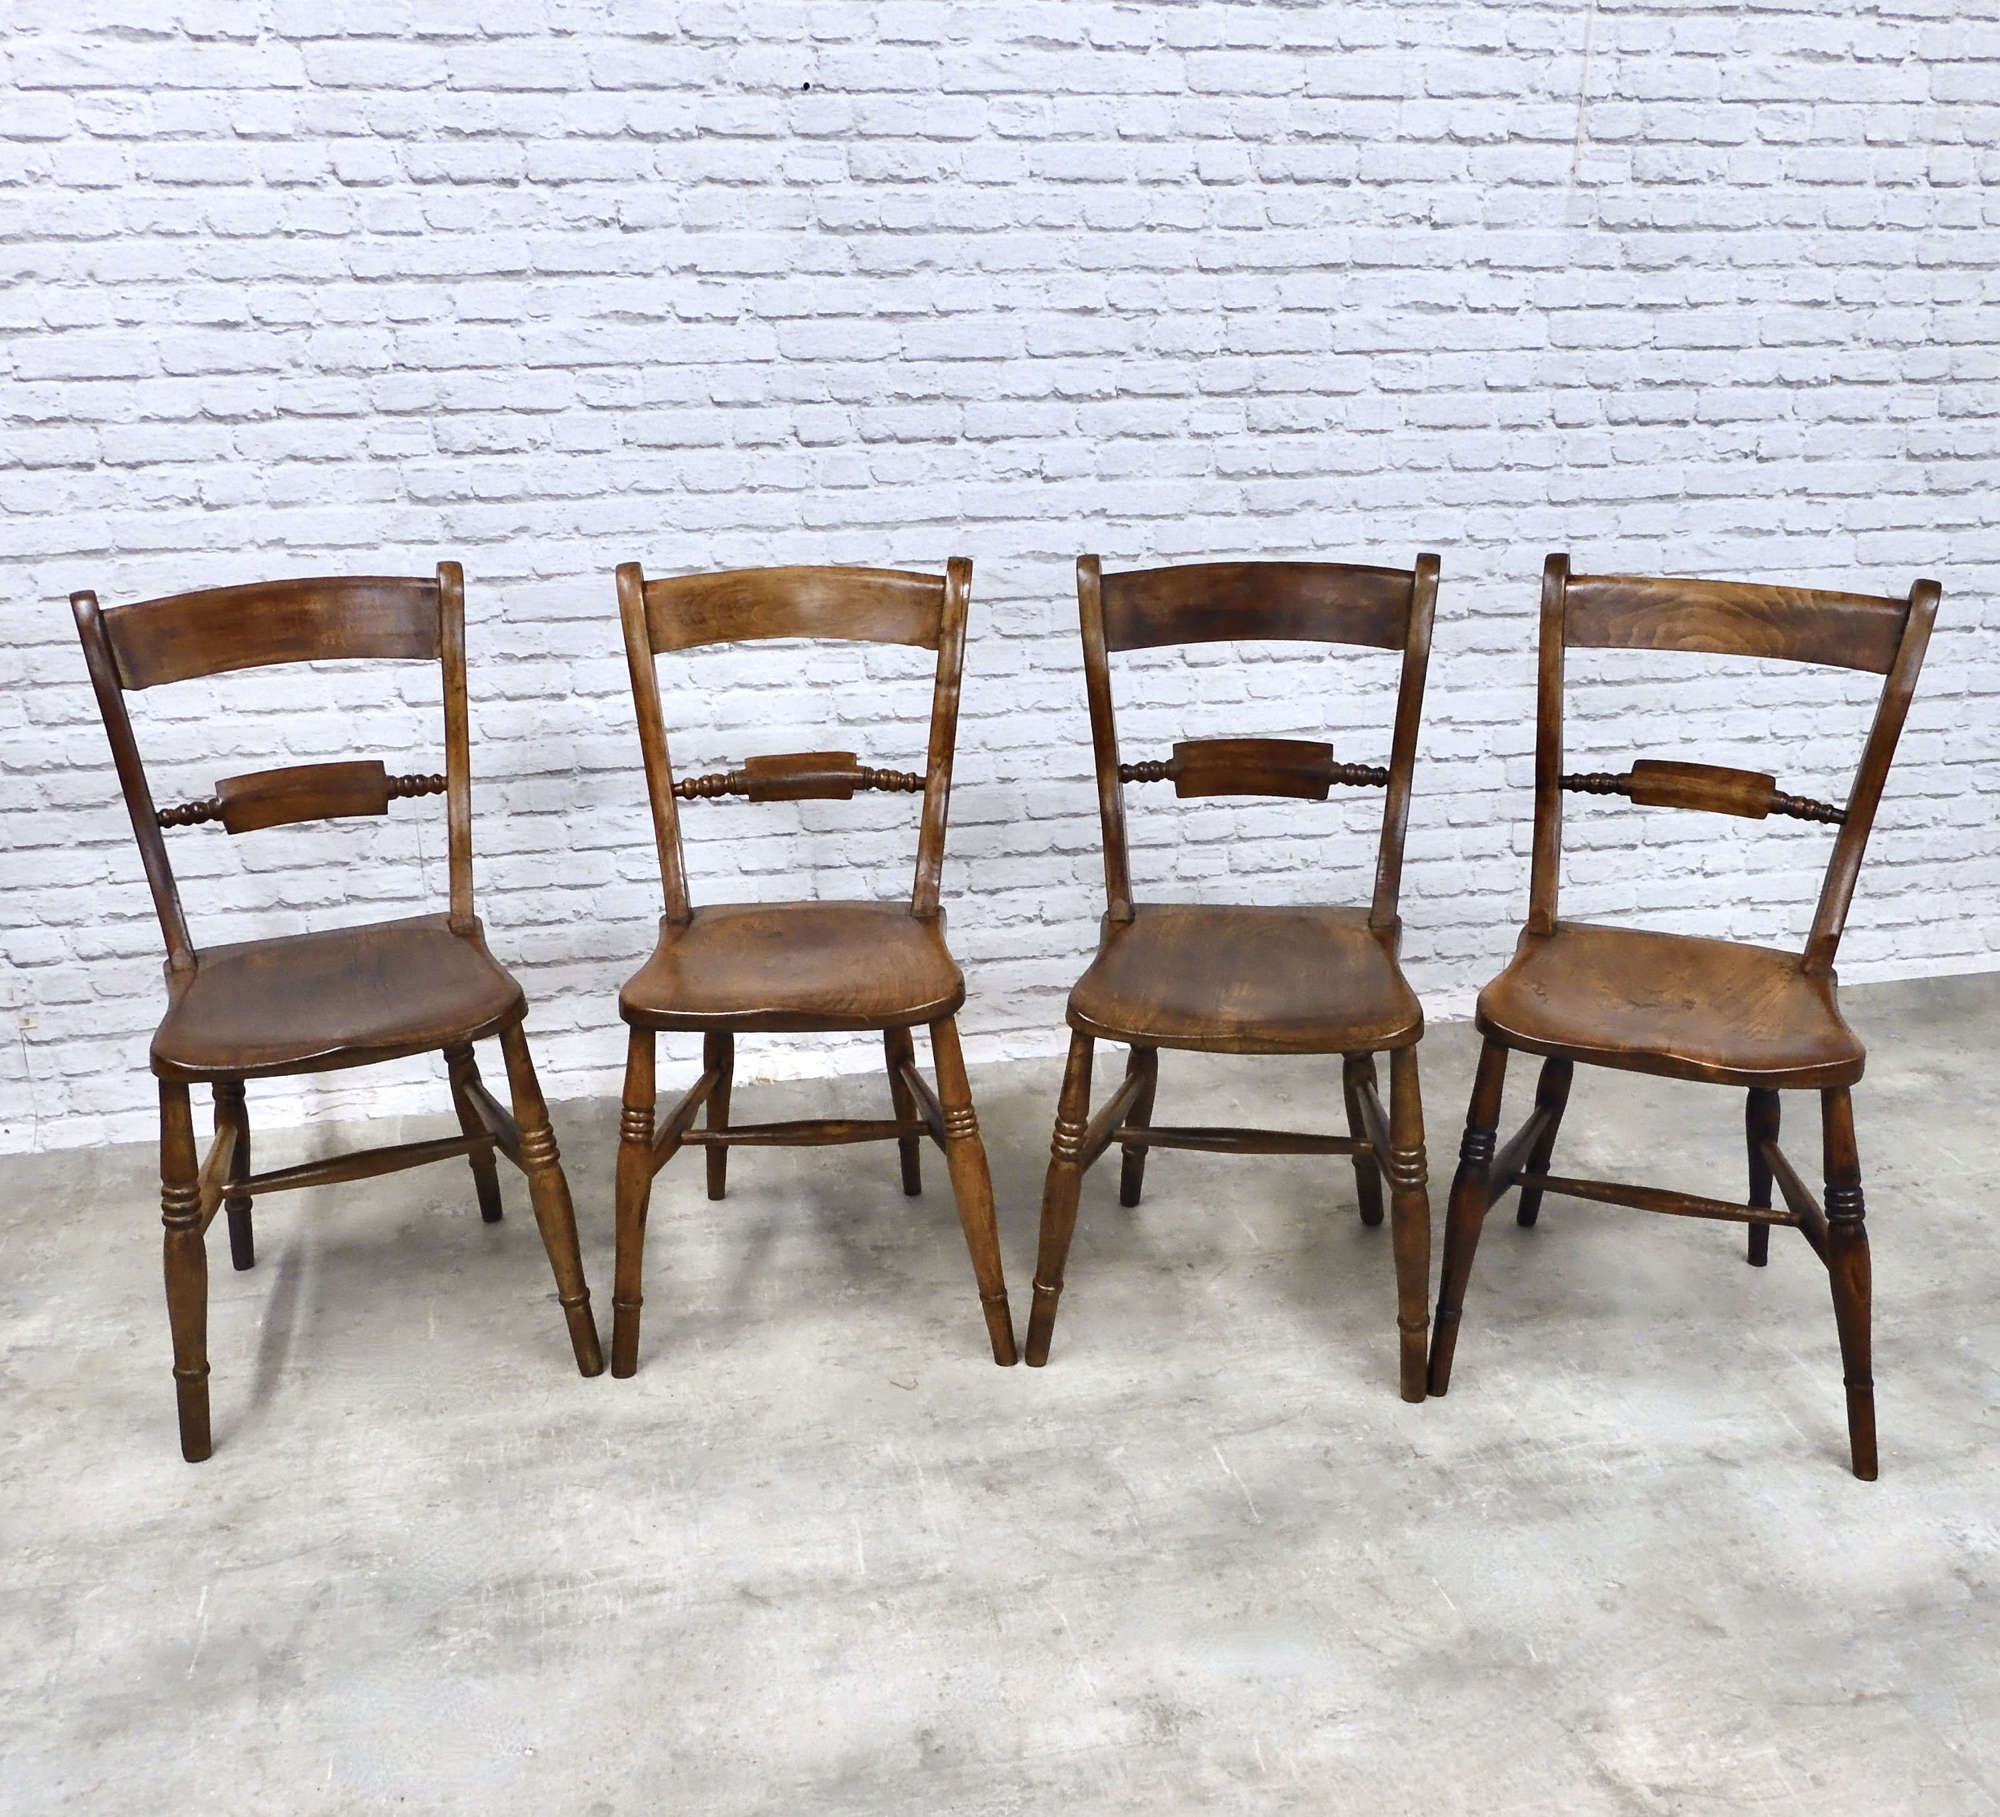 4x Windsor Farmhouse Kitchen Chairs